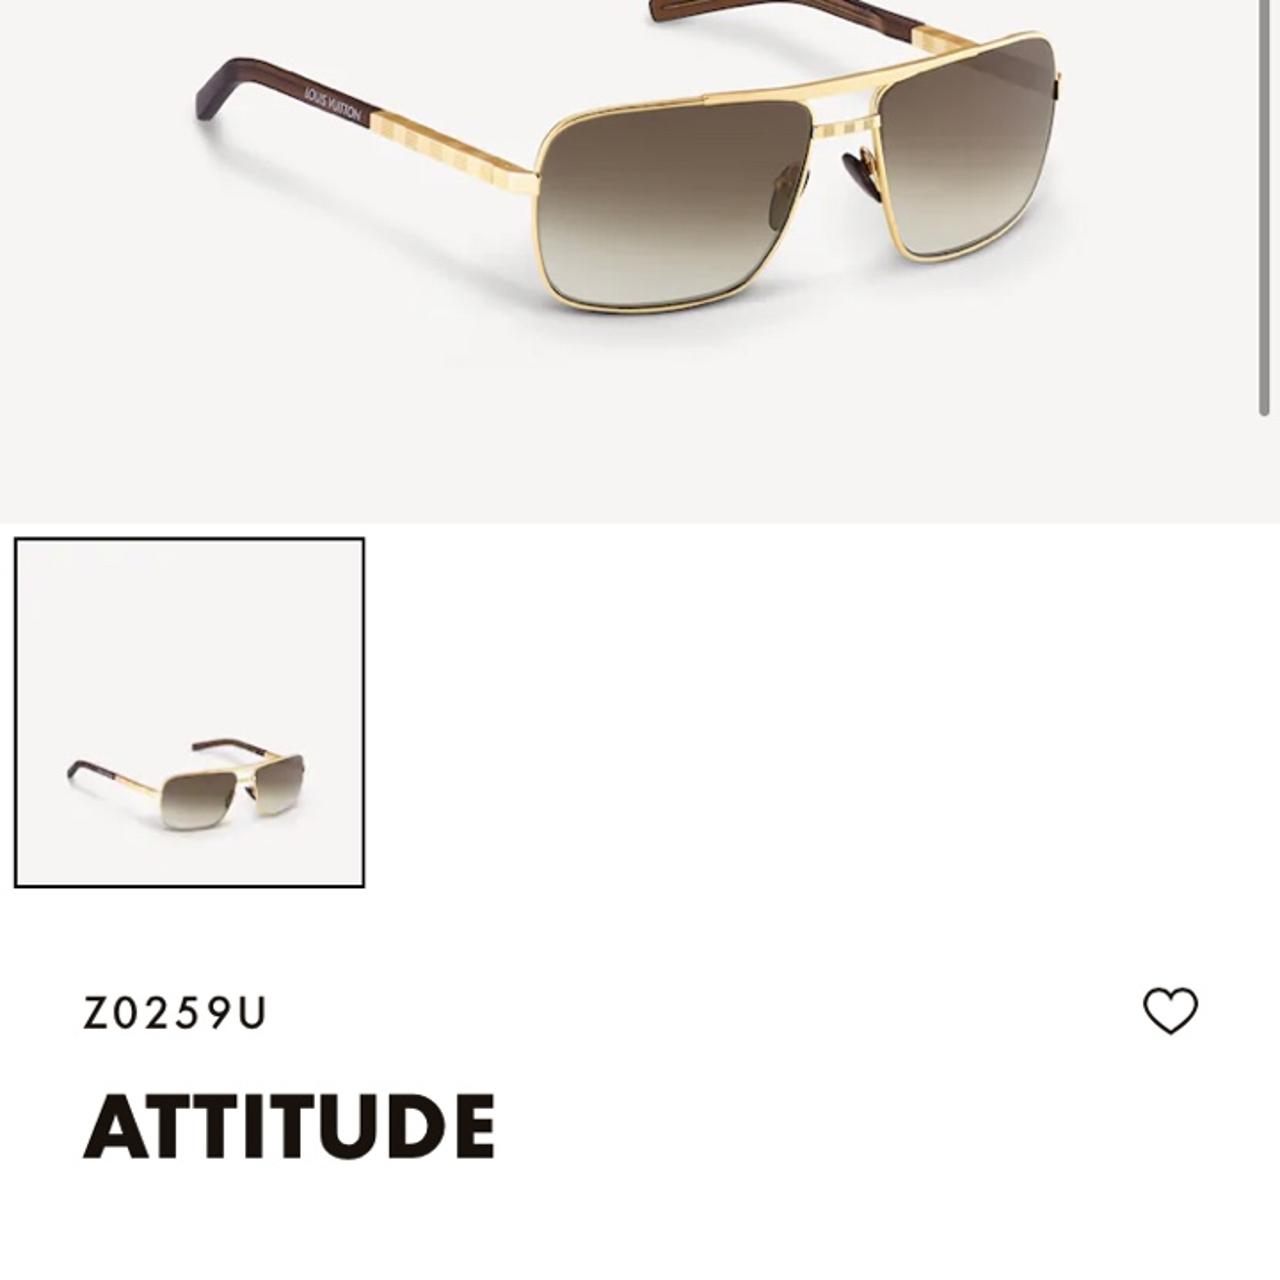 Louis Vuitton attitude sunglasses